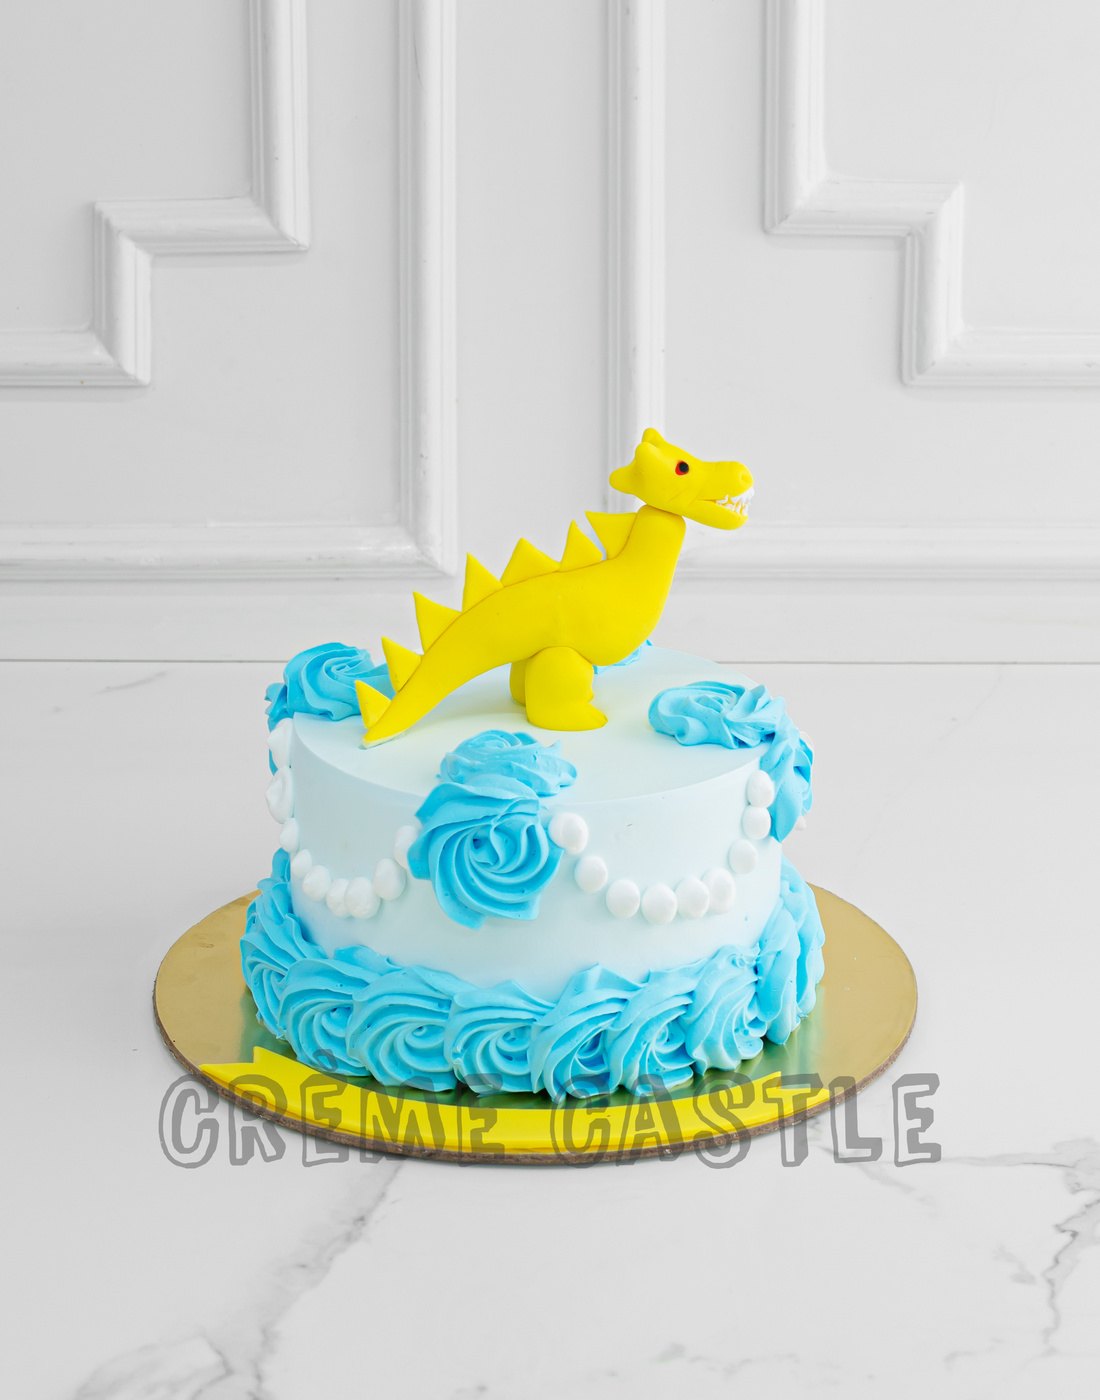 Dragon cake - Decorated Cake by JewelsCakessss - CakesDecor